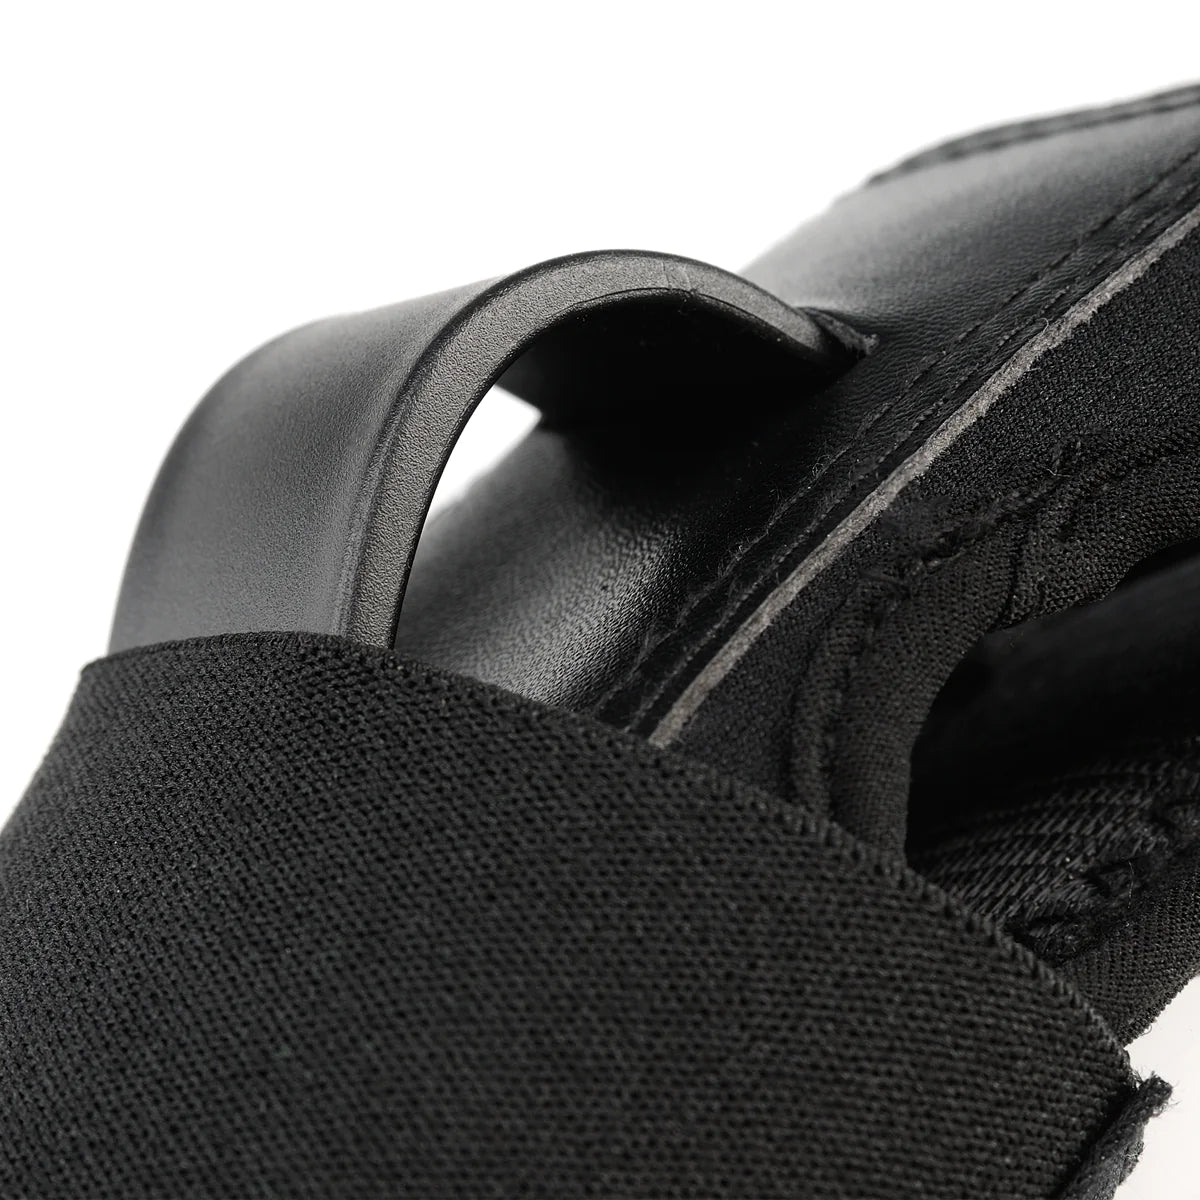 Protecciones Skateboard Bullet Wrist Guard - Black